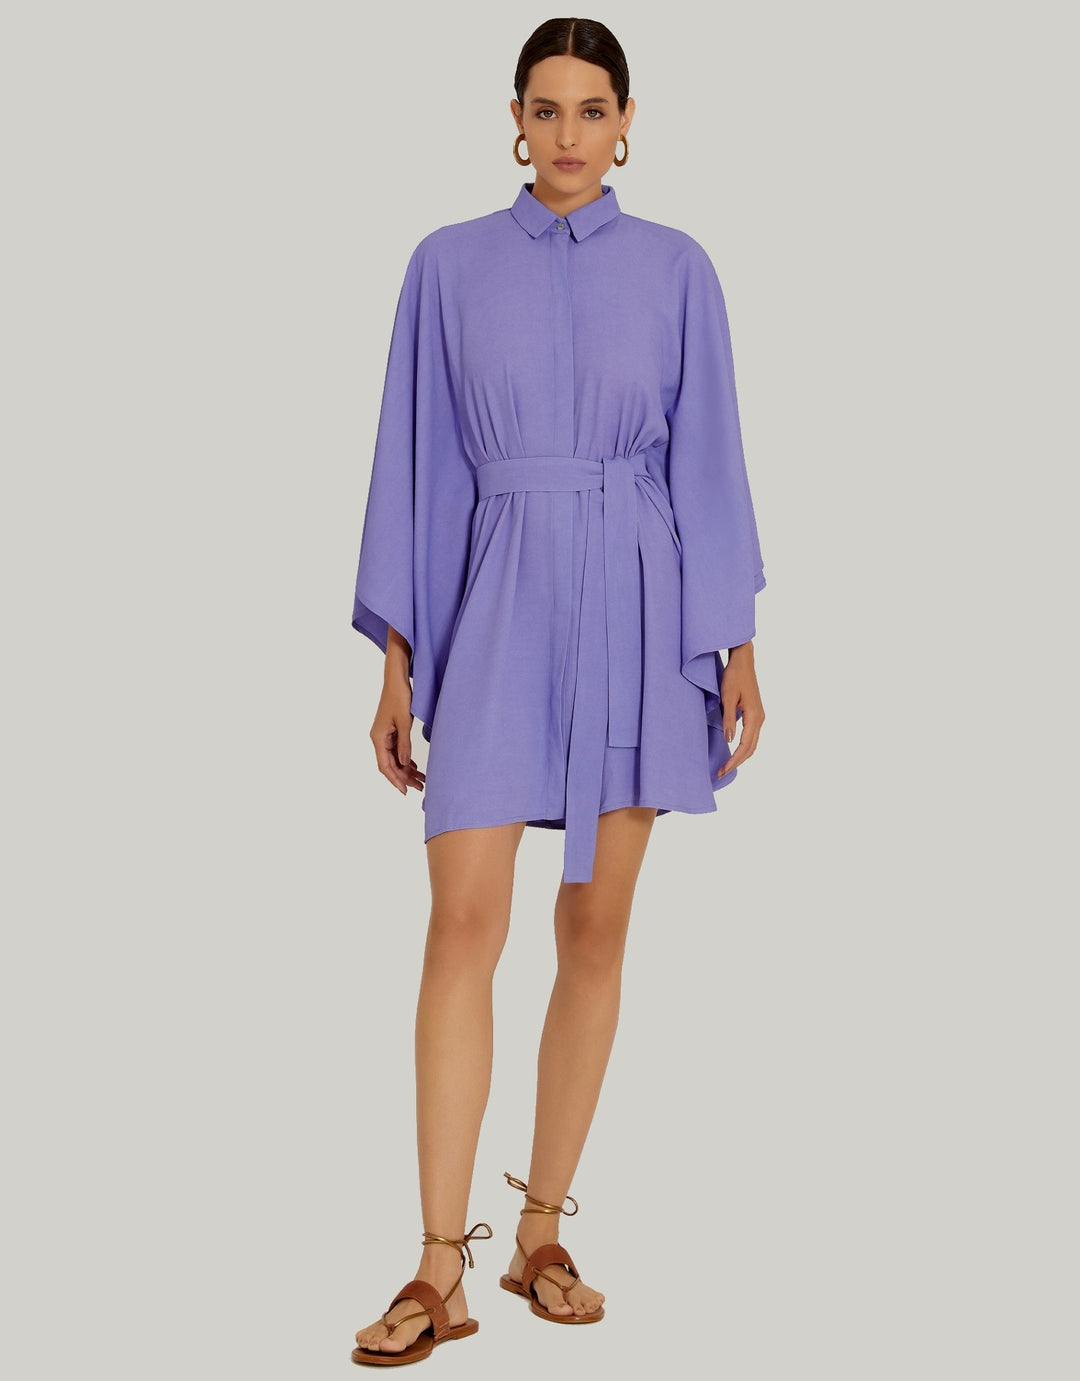 Lenny Niemeyer Short Shirt Dress in Lavender